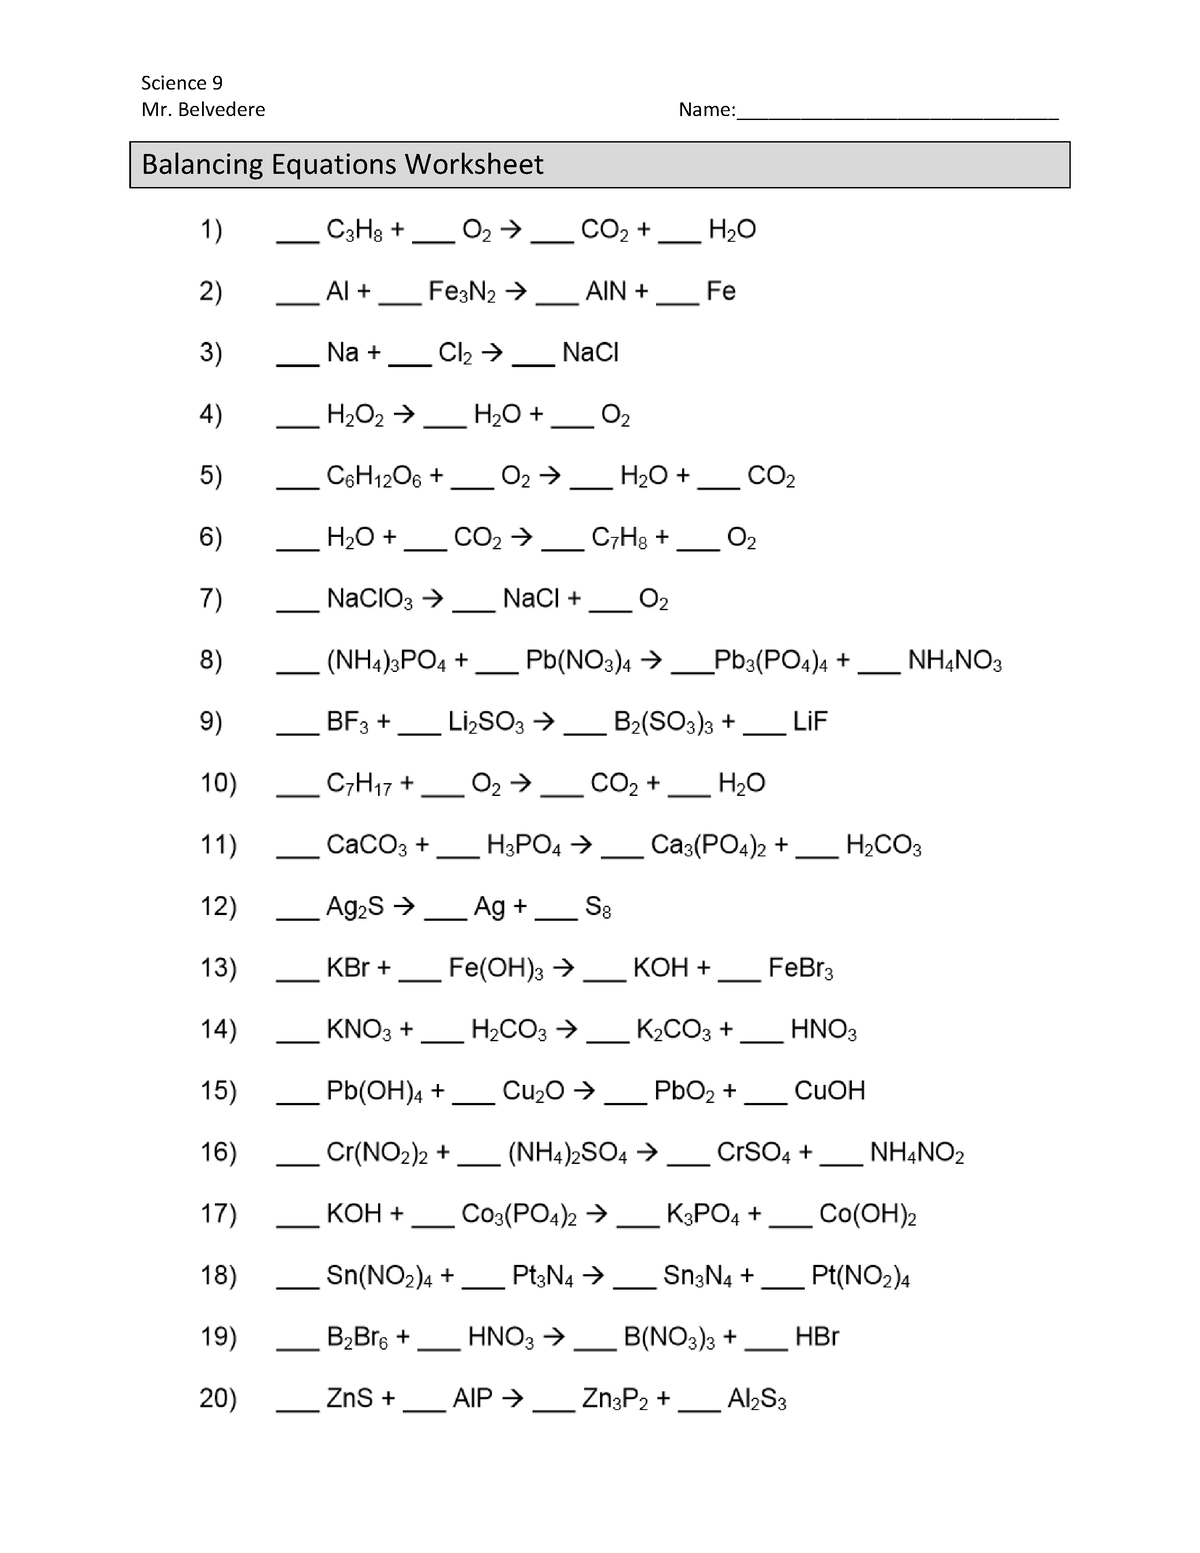 Balancing Chemical Equations Worksheet Part 2 Answer Key